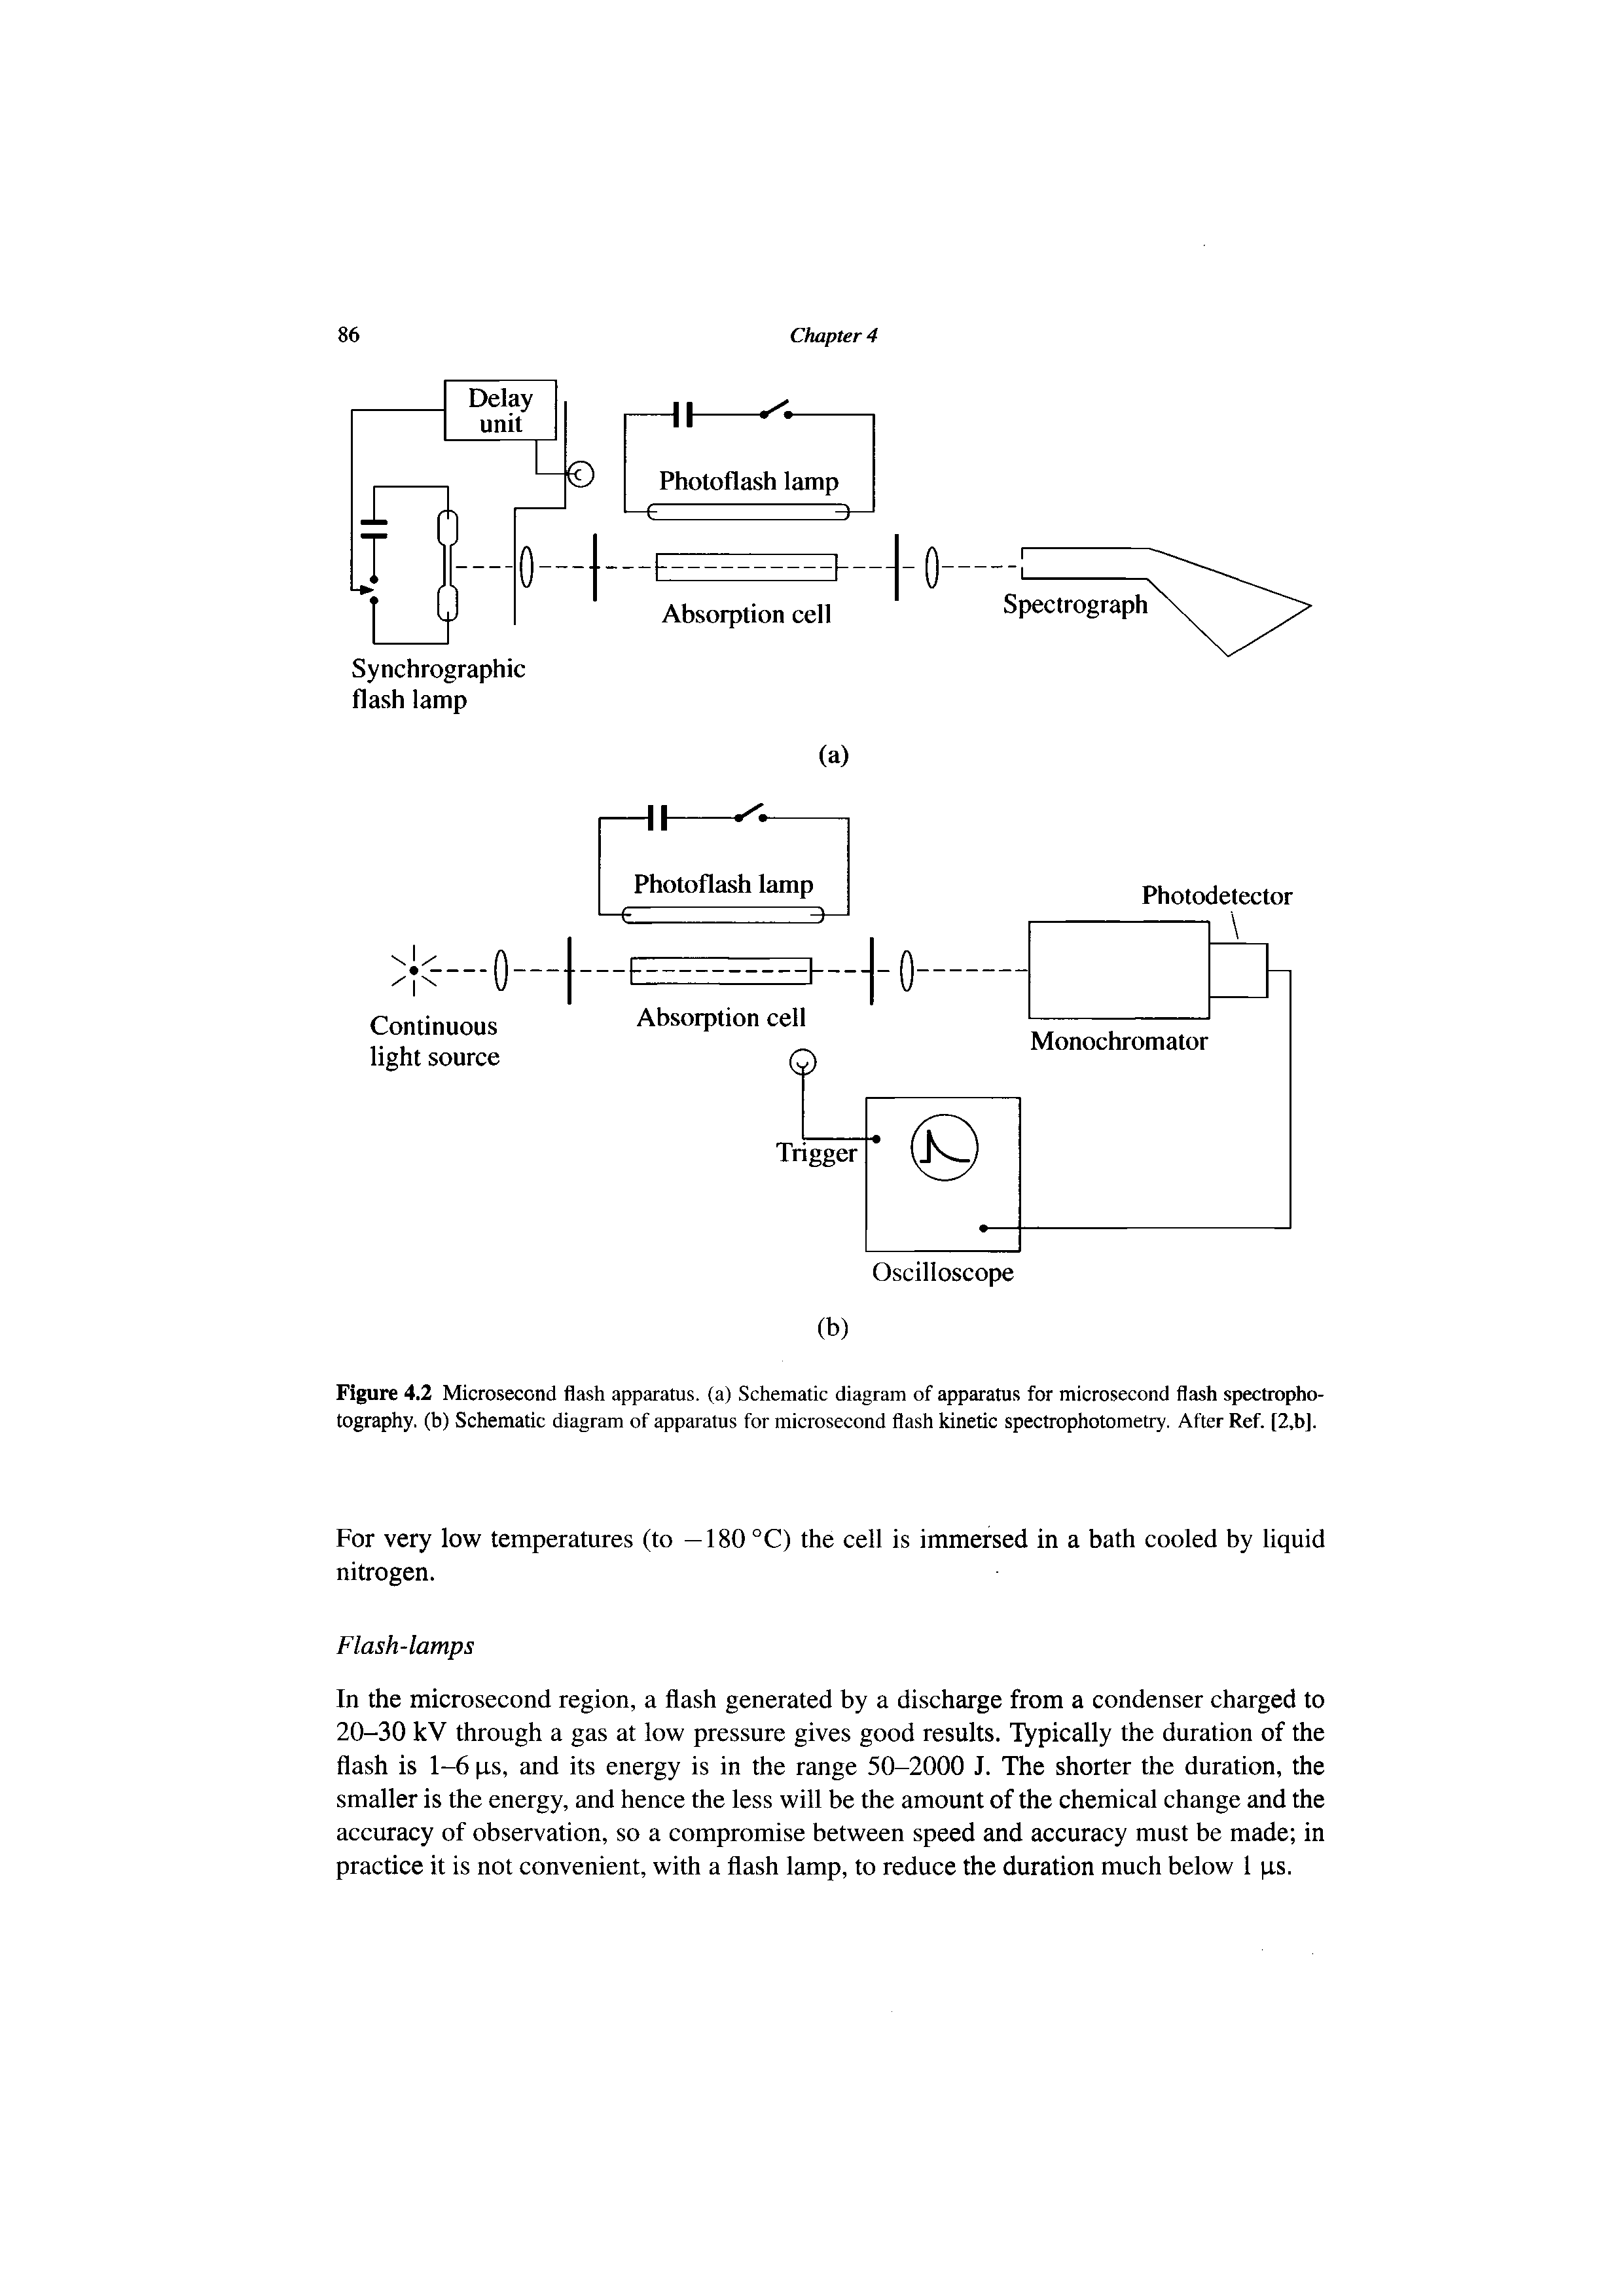 Figure 4.2 Microsecond flash apparatus, (a) Schematic diagram of apparatus for microsecond flash spectropho-tography. (b) Schematic diagram of apparatus for microsecond flash kinetic spectrophotometry. After Ref. [2,b].